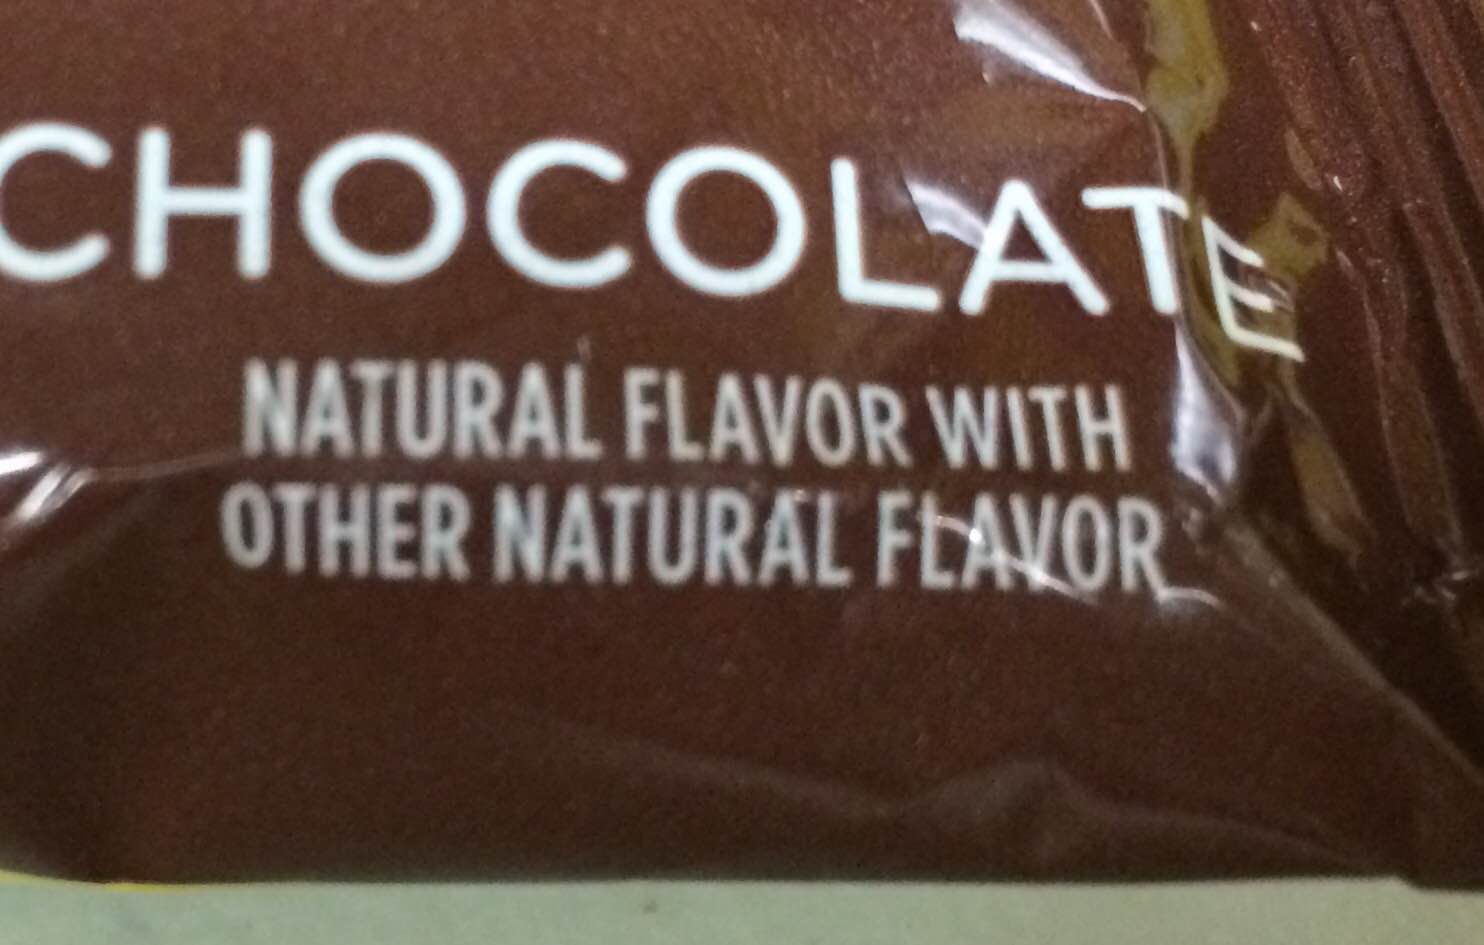 So, natural flavor then?